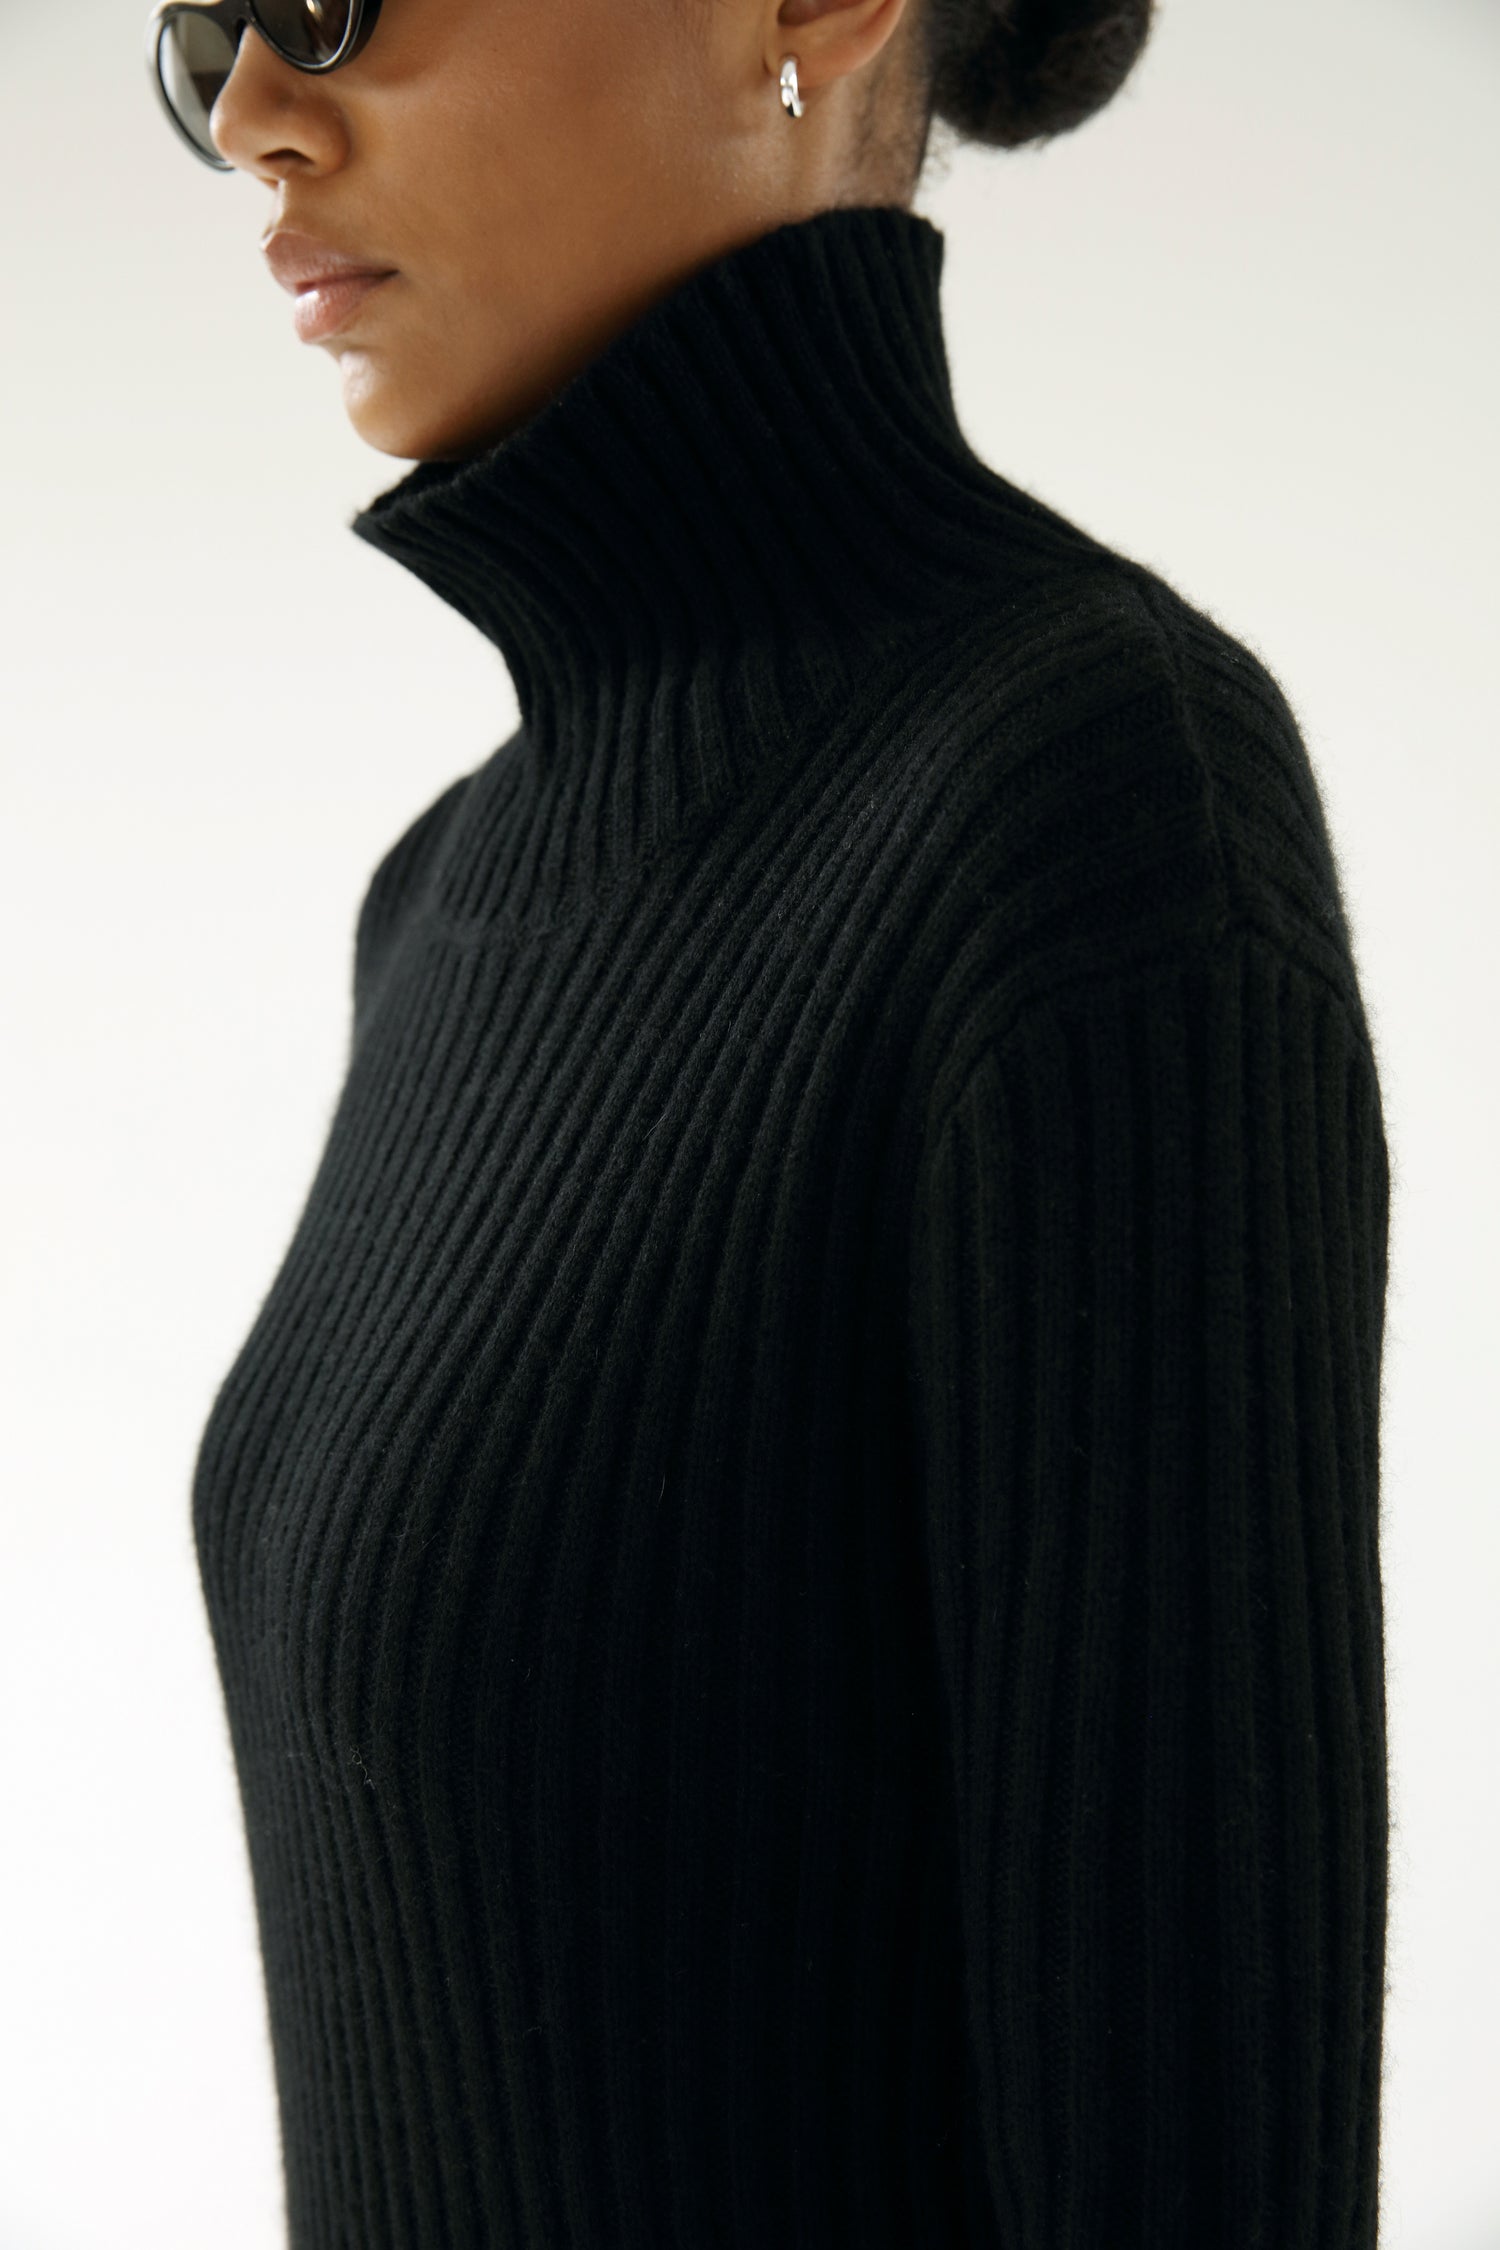 Sue Rib Knit Dress, black